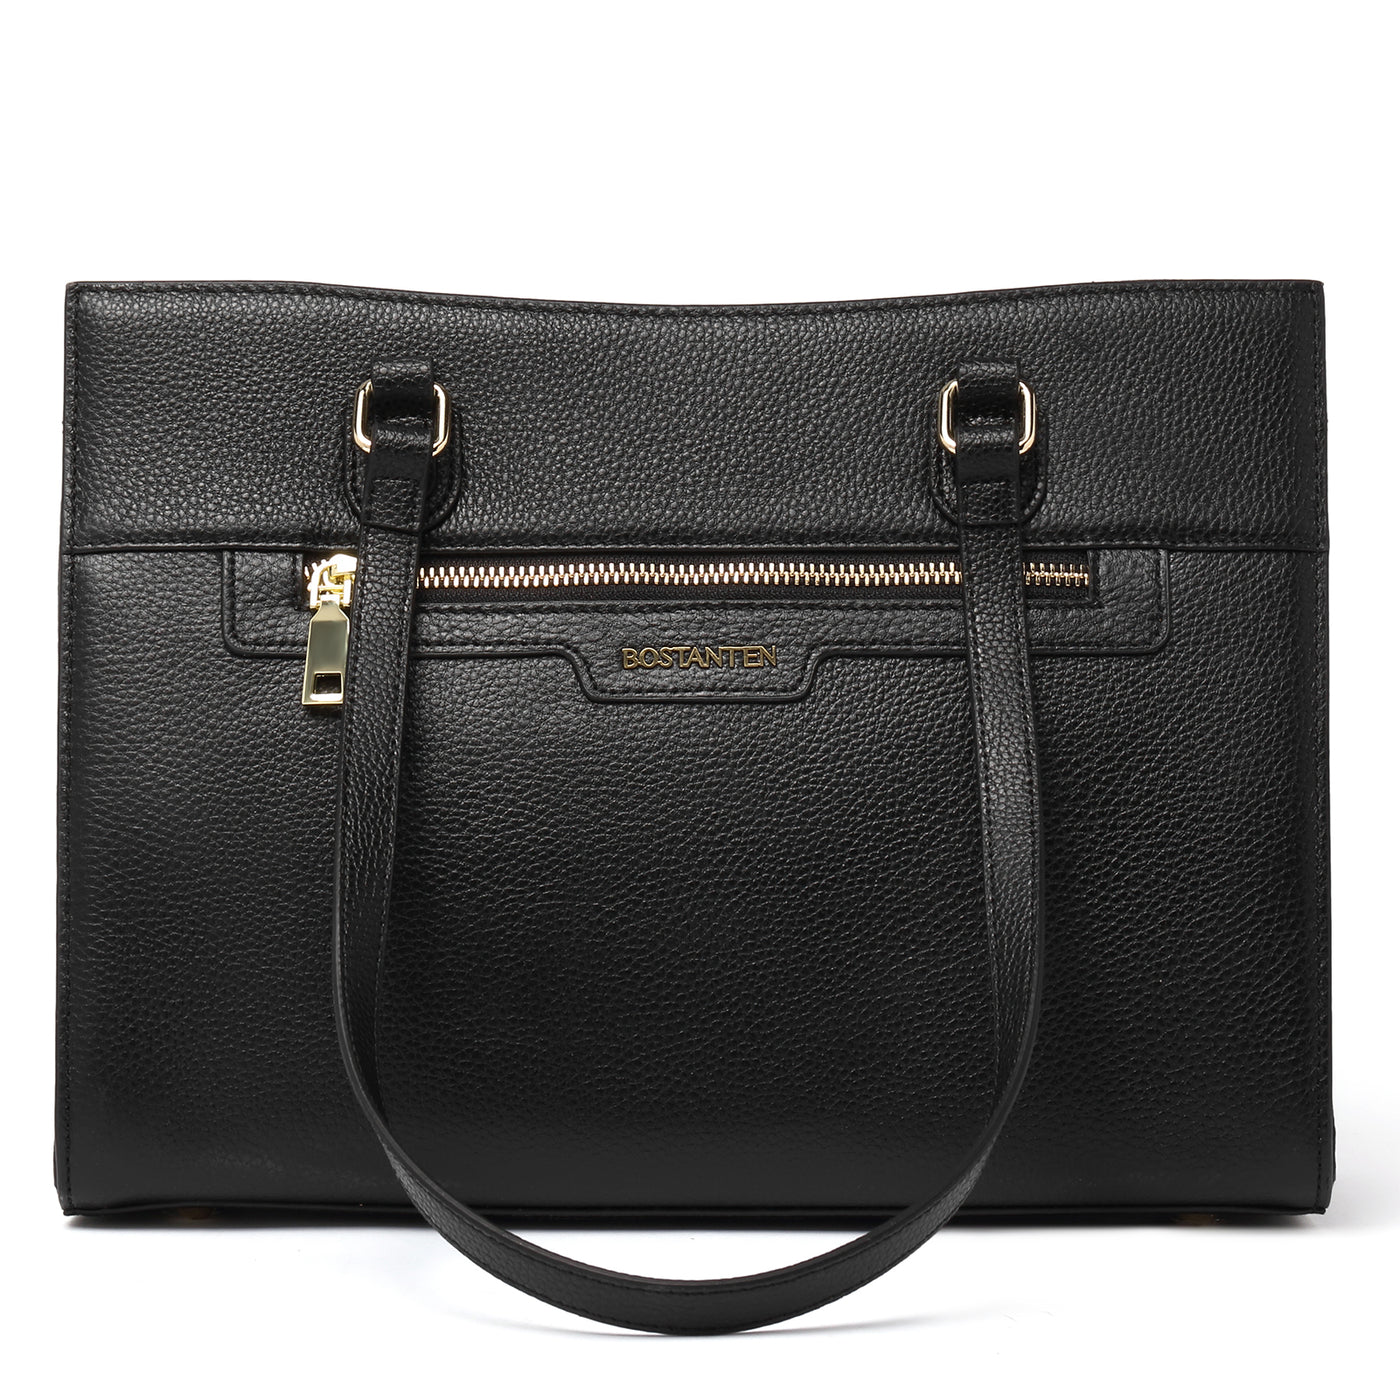 BOSTANTEN Women Leather Handbags Designer Satchel Purses Work Top Handle Shoulder Tote Bag for Travel Daily - BOSTANTEN